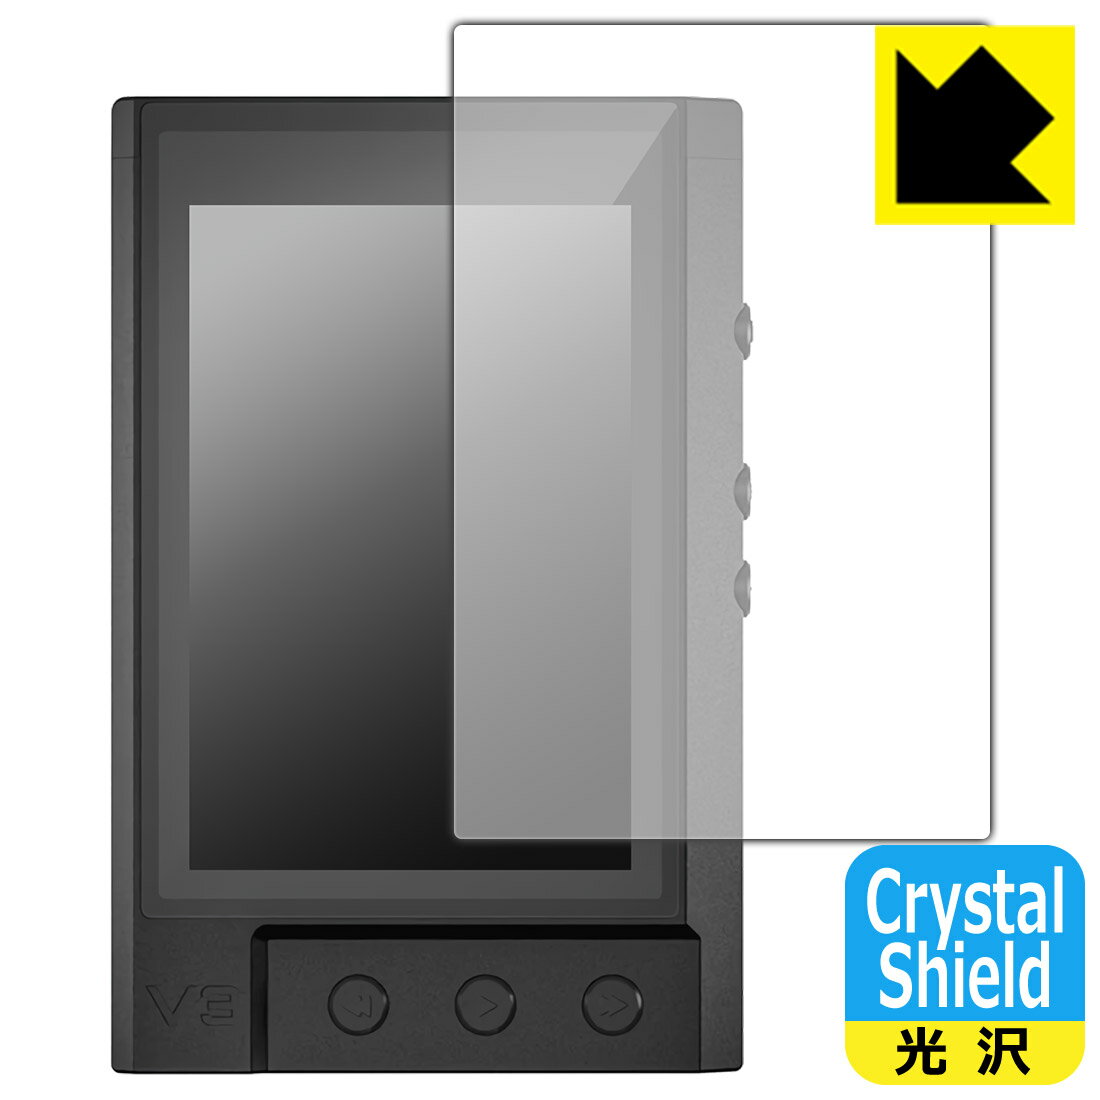 Crystal Shield【光沢】保護フィルム TempoTec V3 (表面用) 日本製 自社製造直販